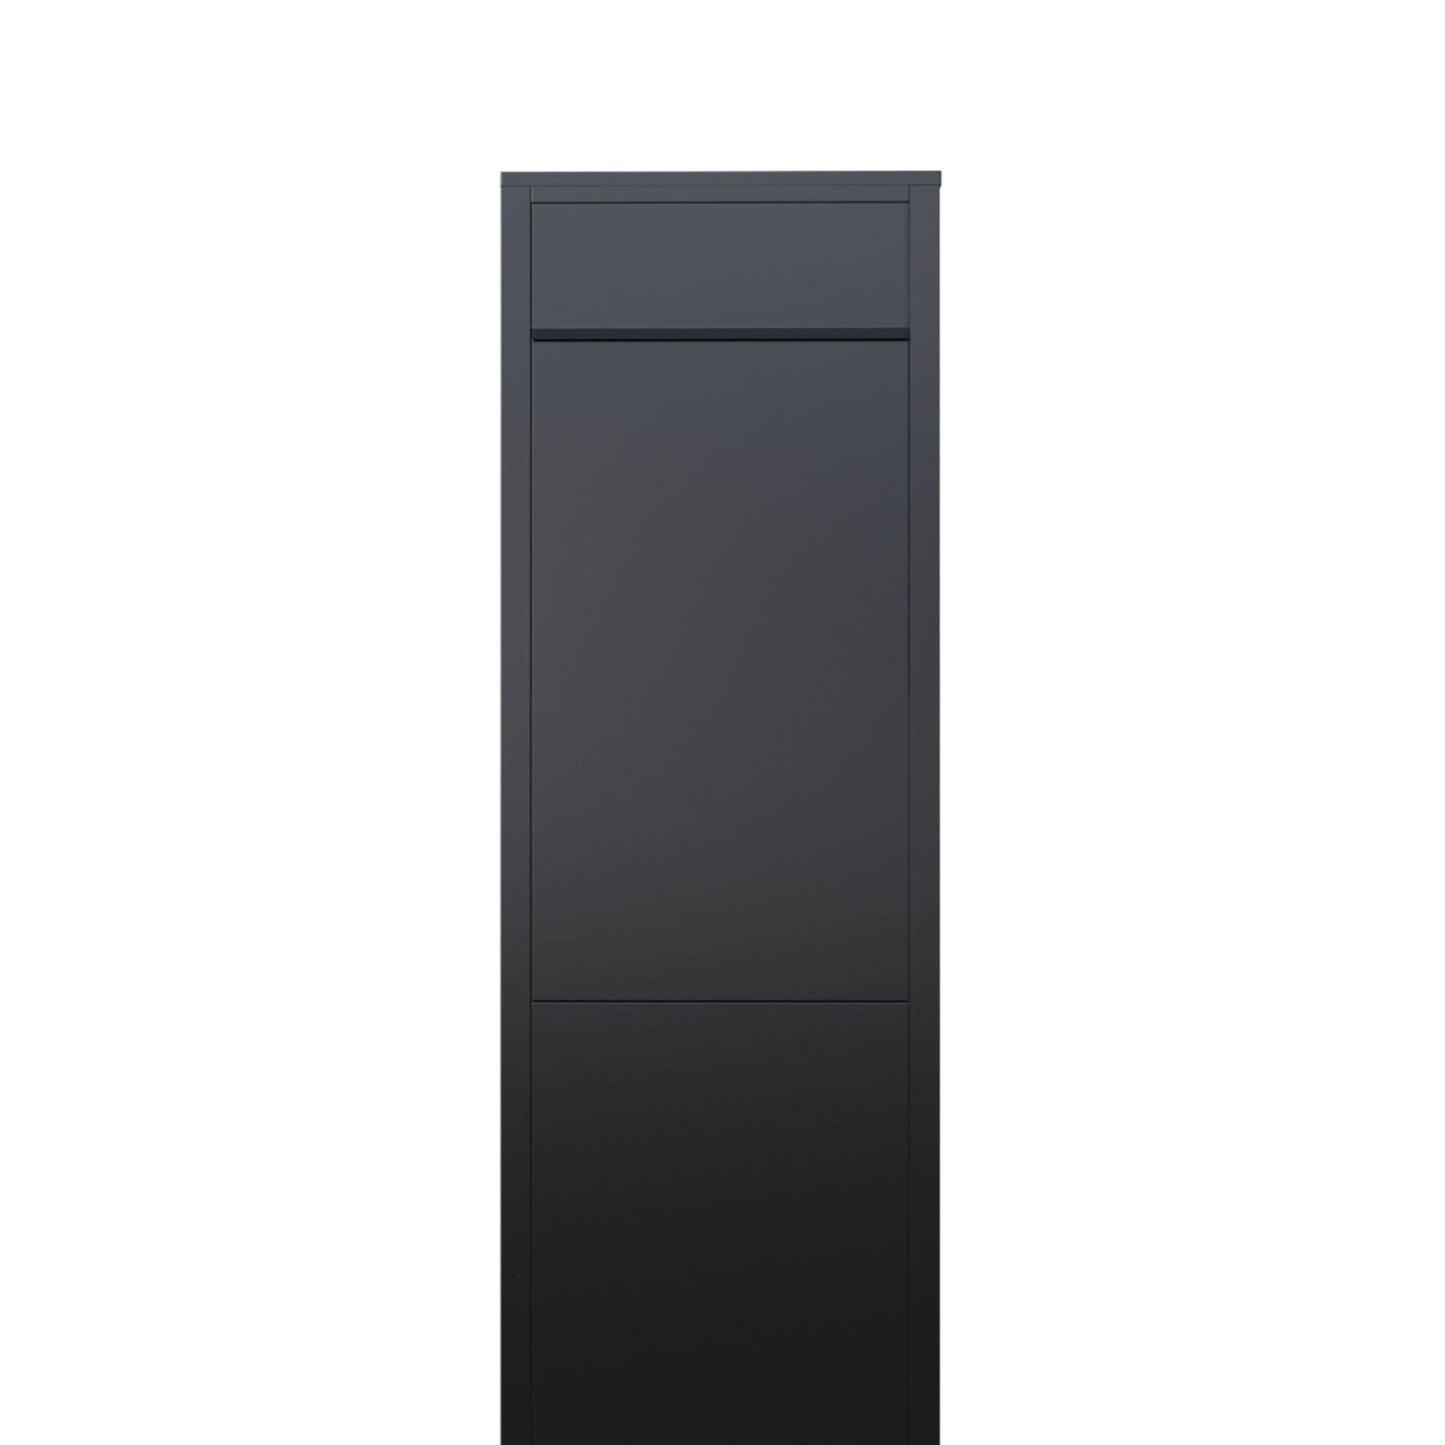 BIG BOX by Bravios - Modern stand-alone black mailbox